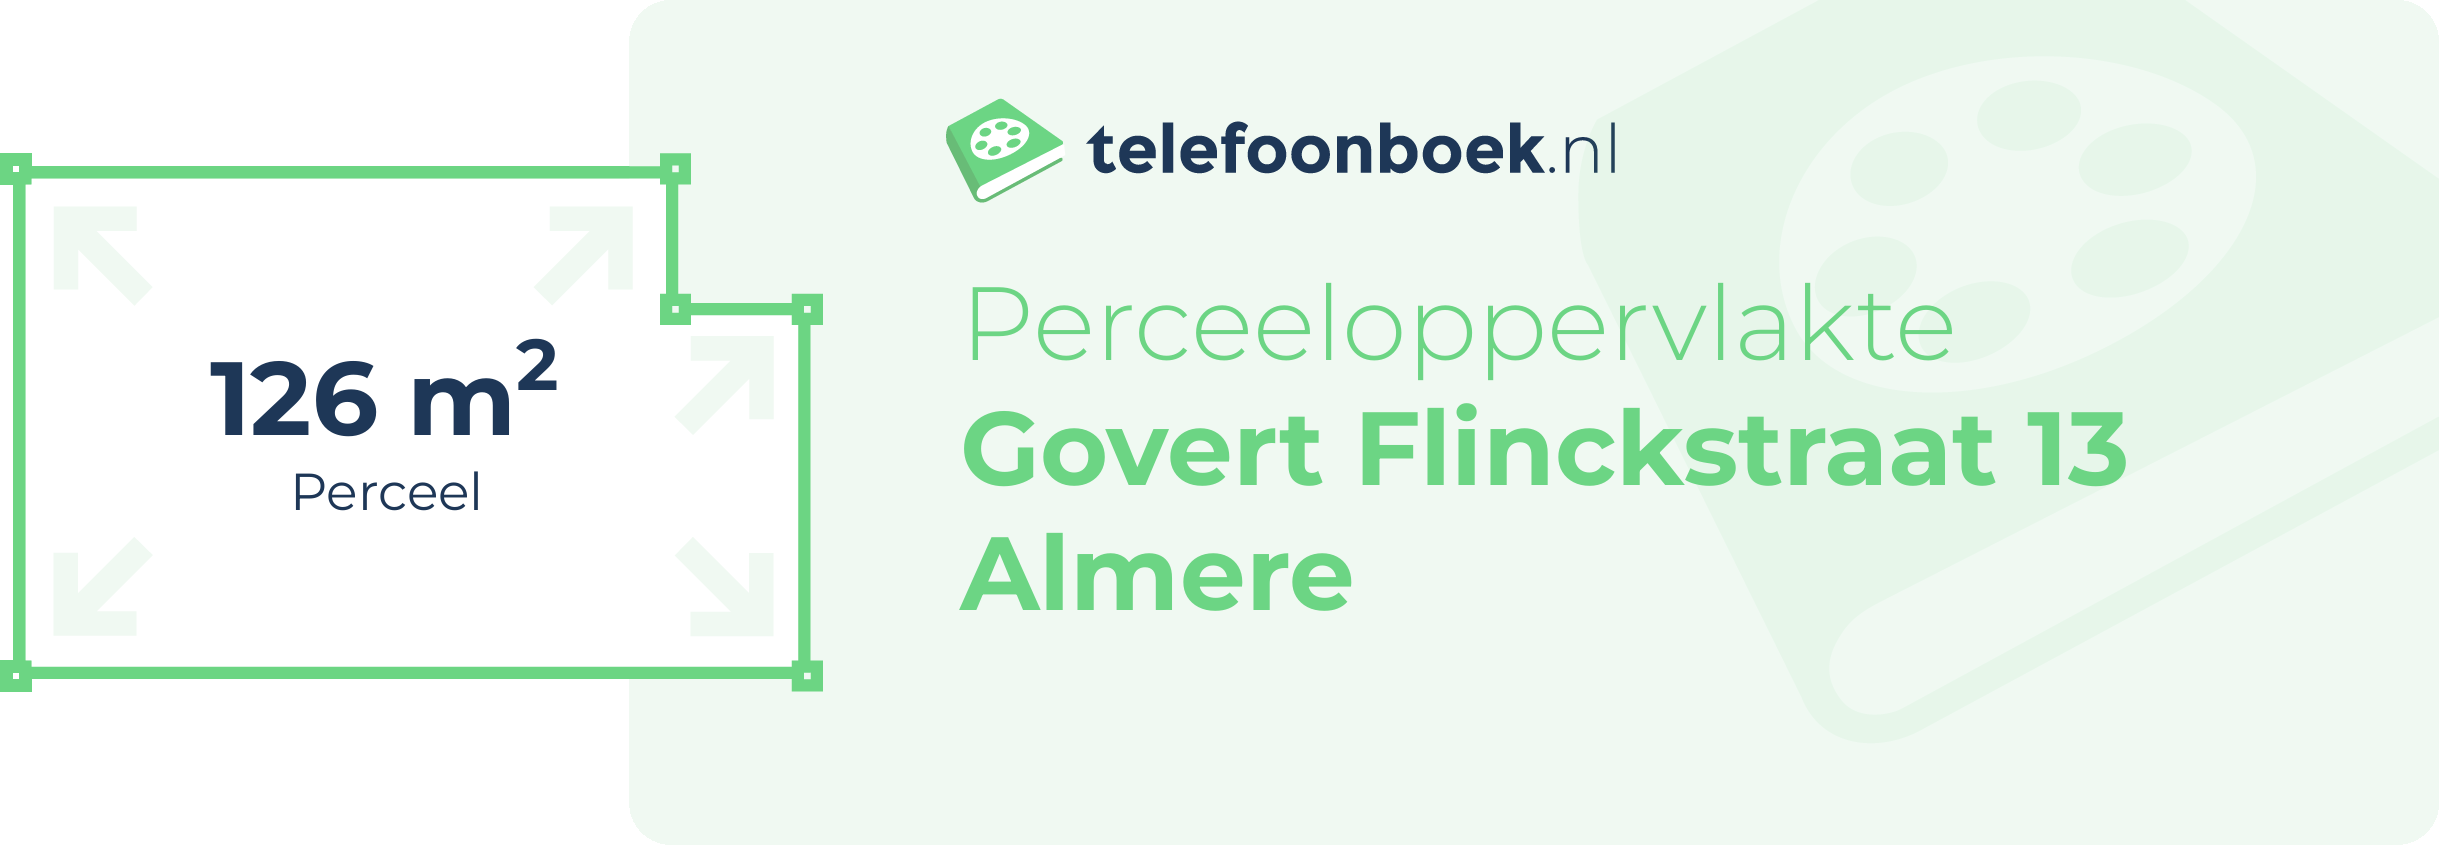 Perceeloppervlakte Govert Flinckstraat 13 Almere